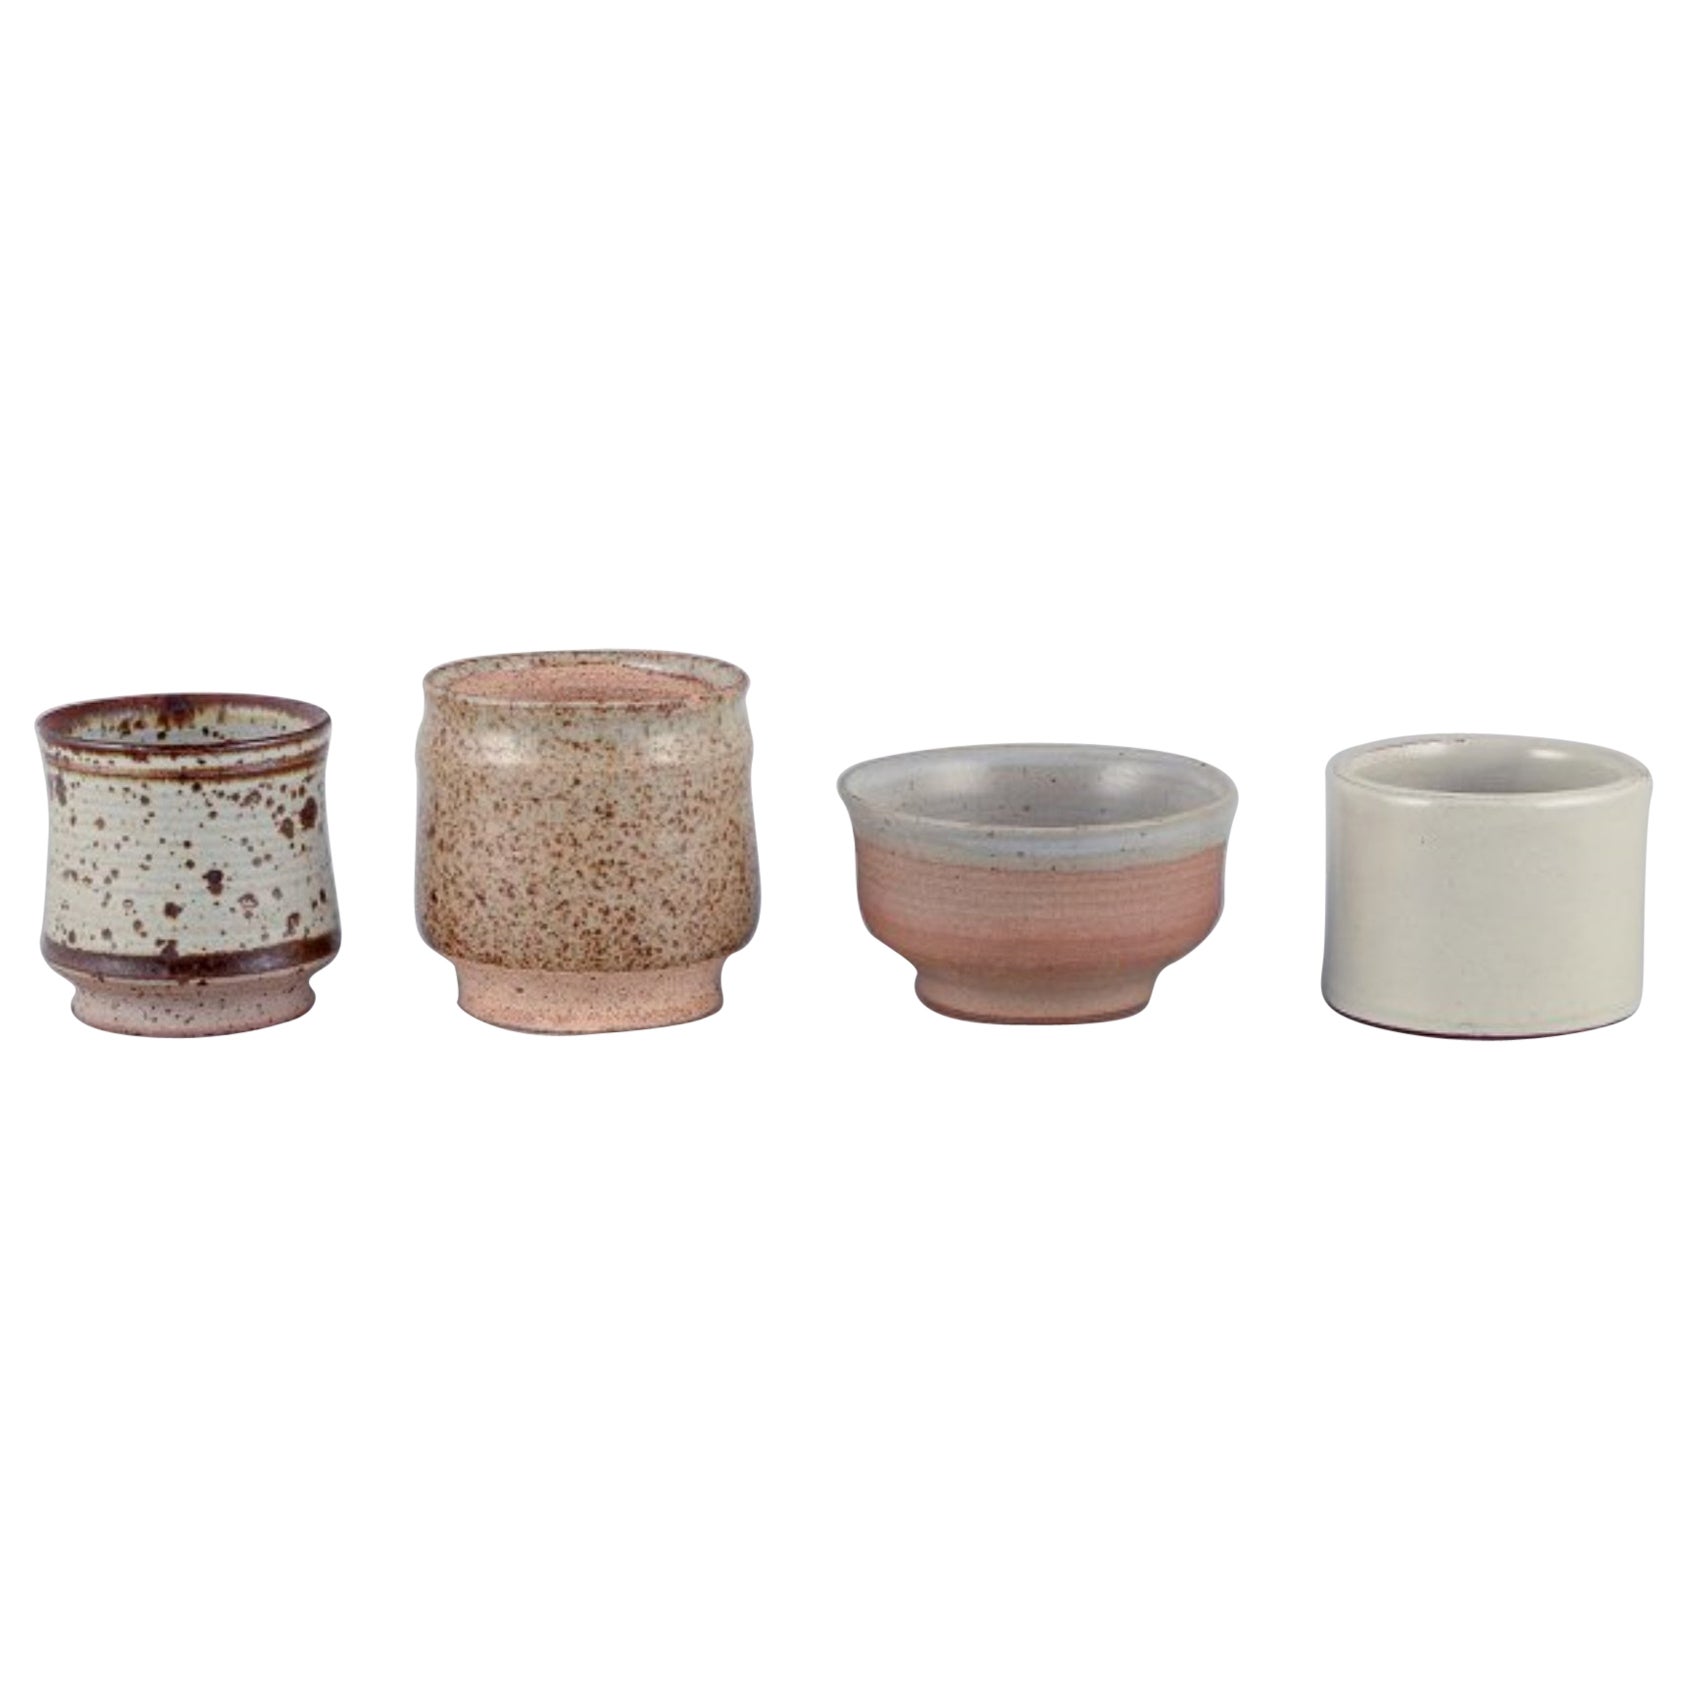 Mogens Nielsen, Nysted / Stouby Keramik und andere. Vier Pieces aus Keramik